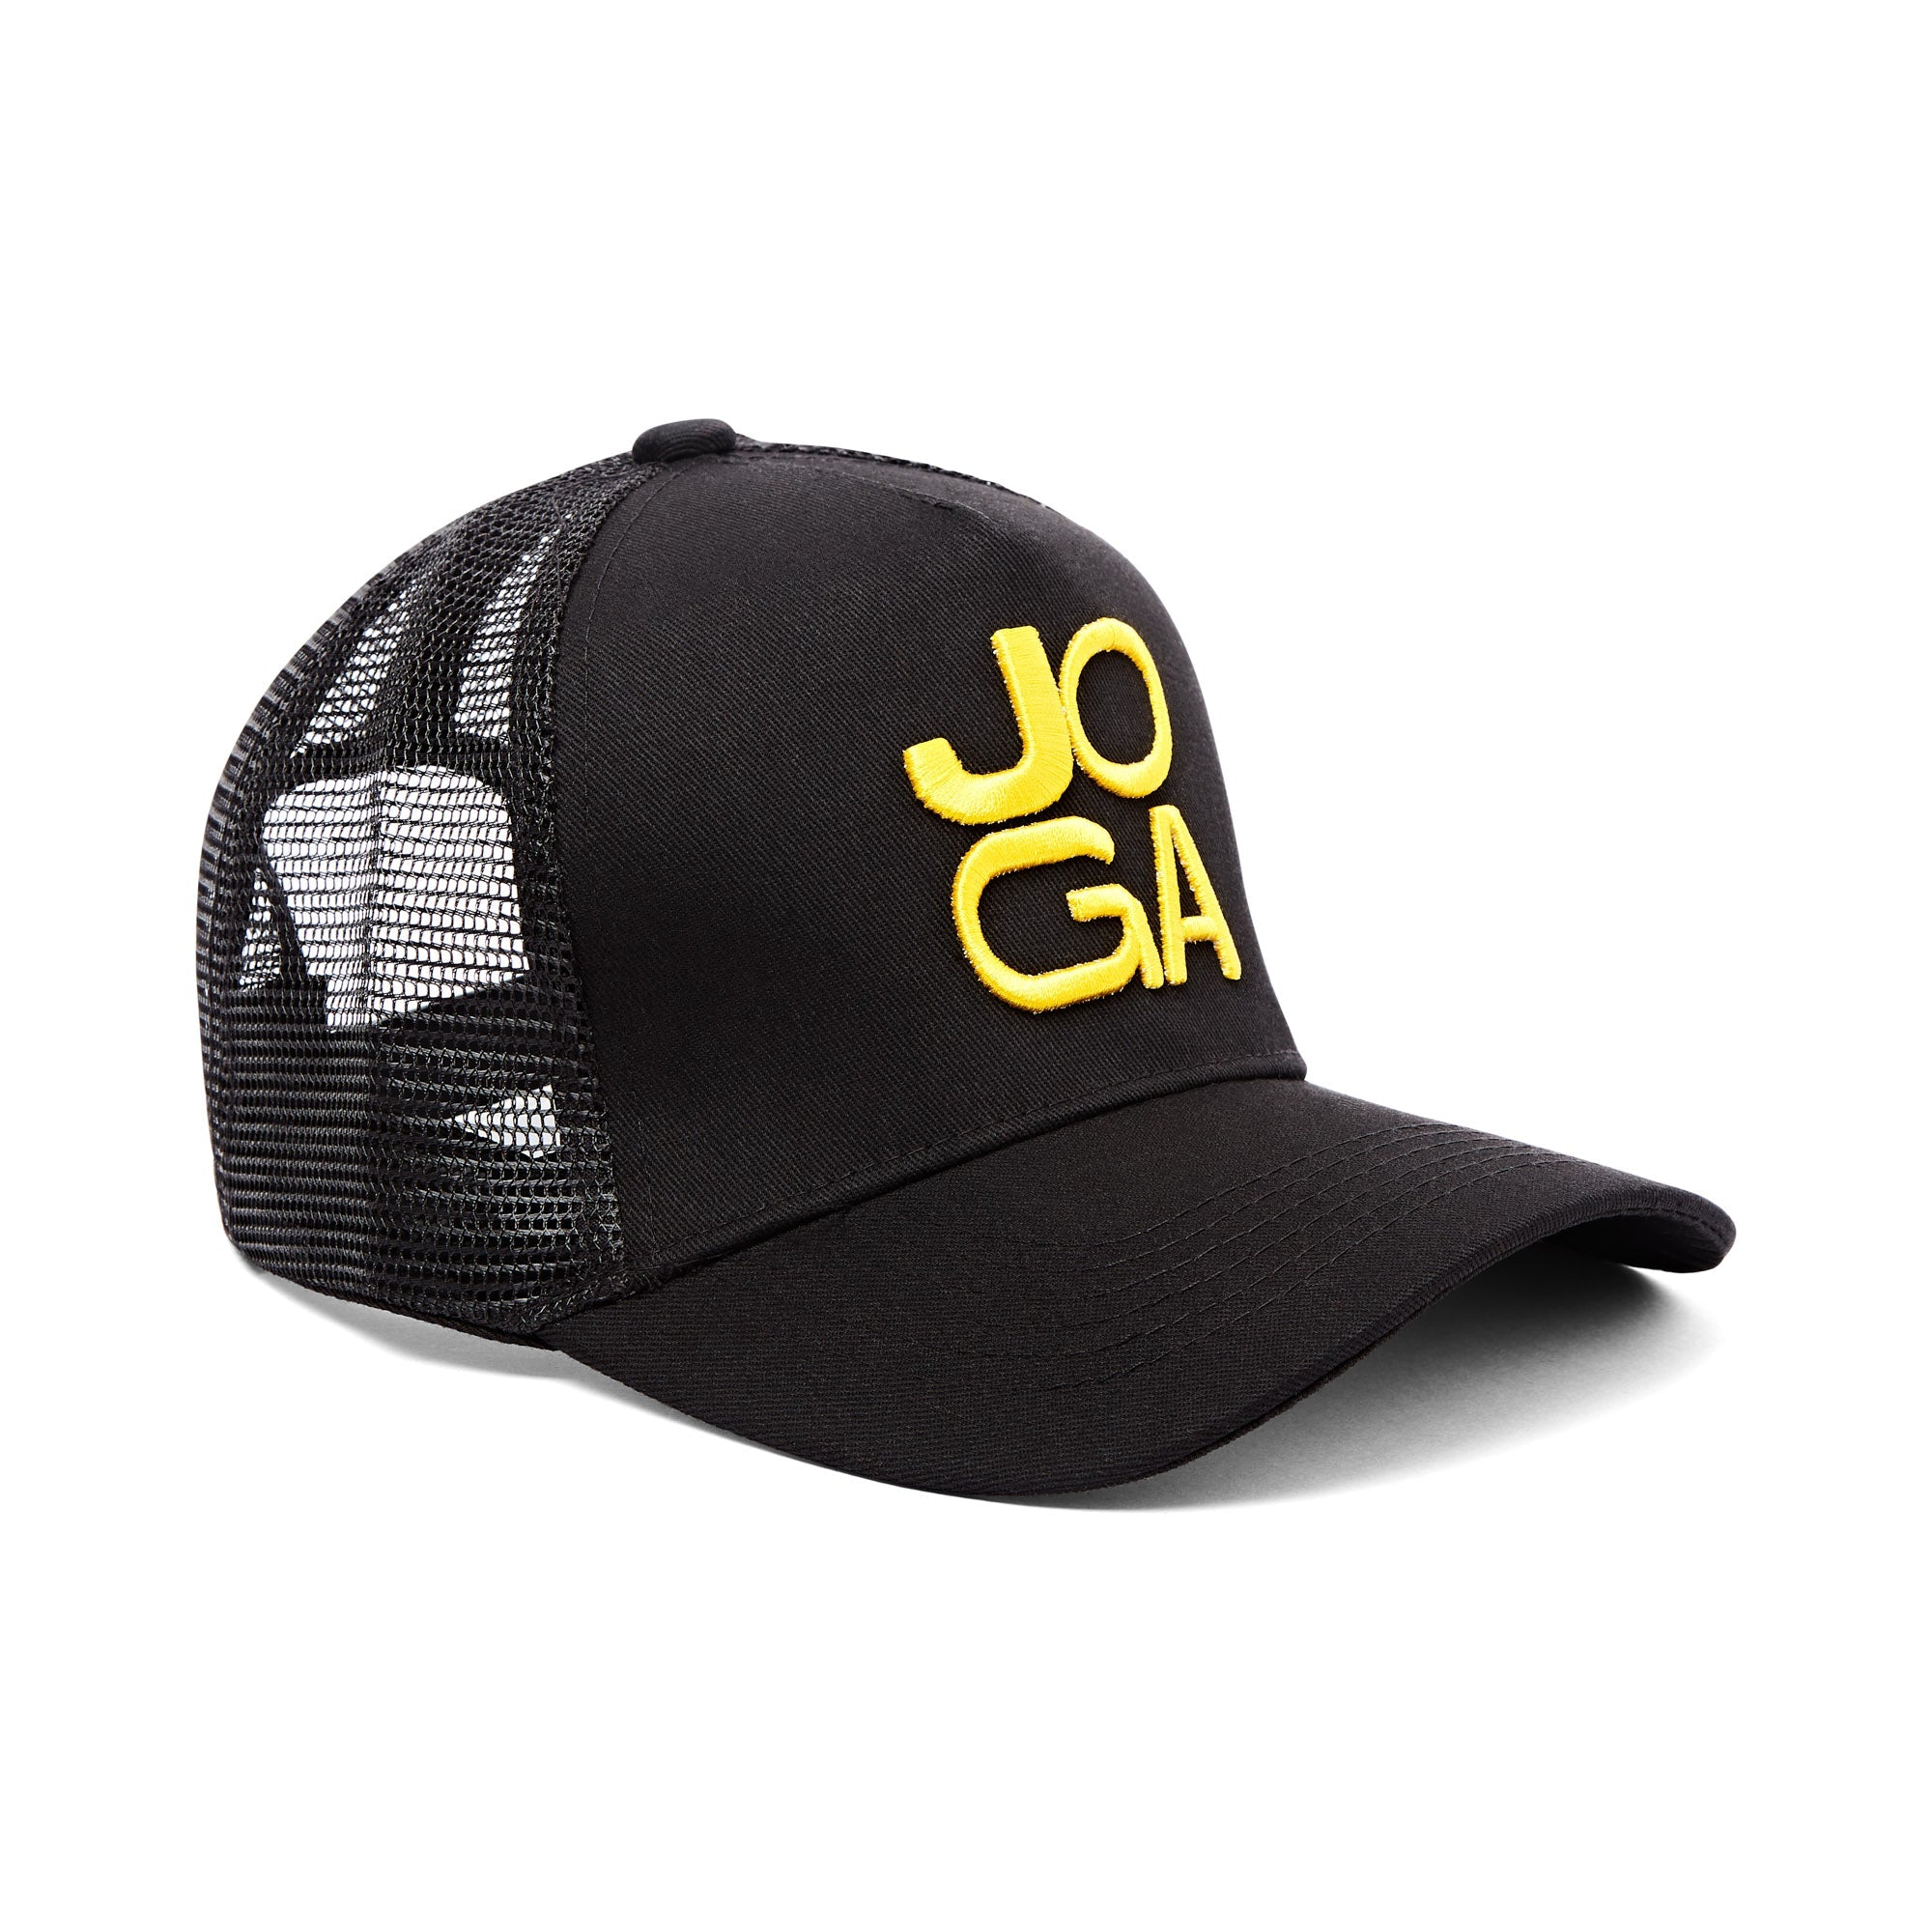 JOGA Cap - Black/Yellow